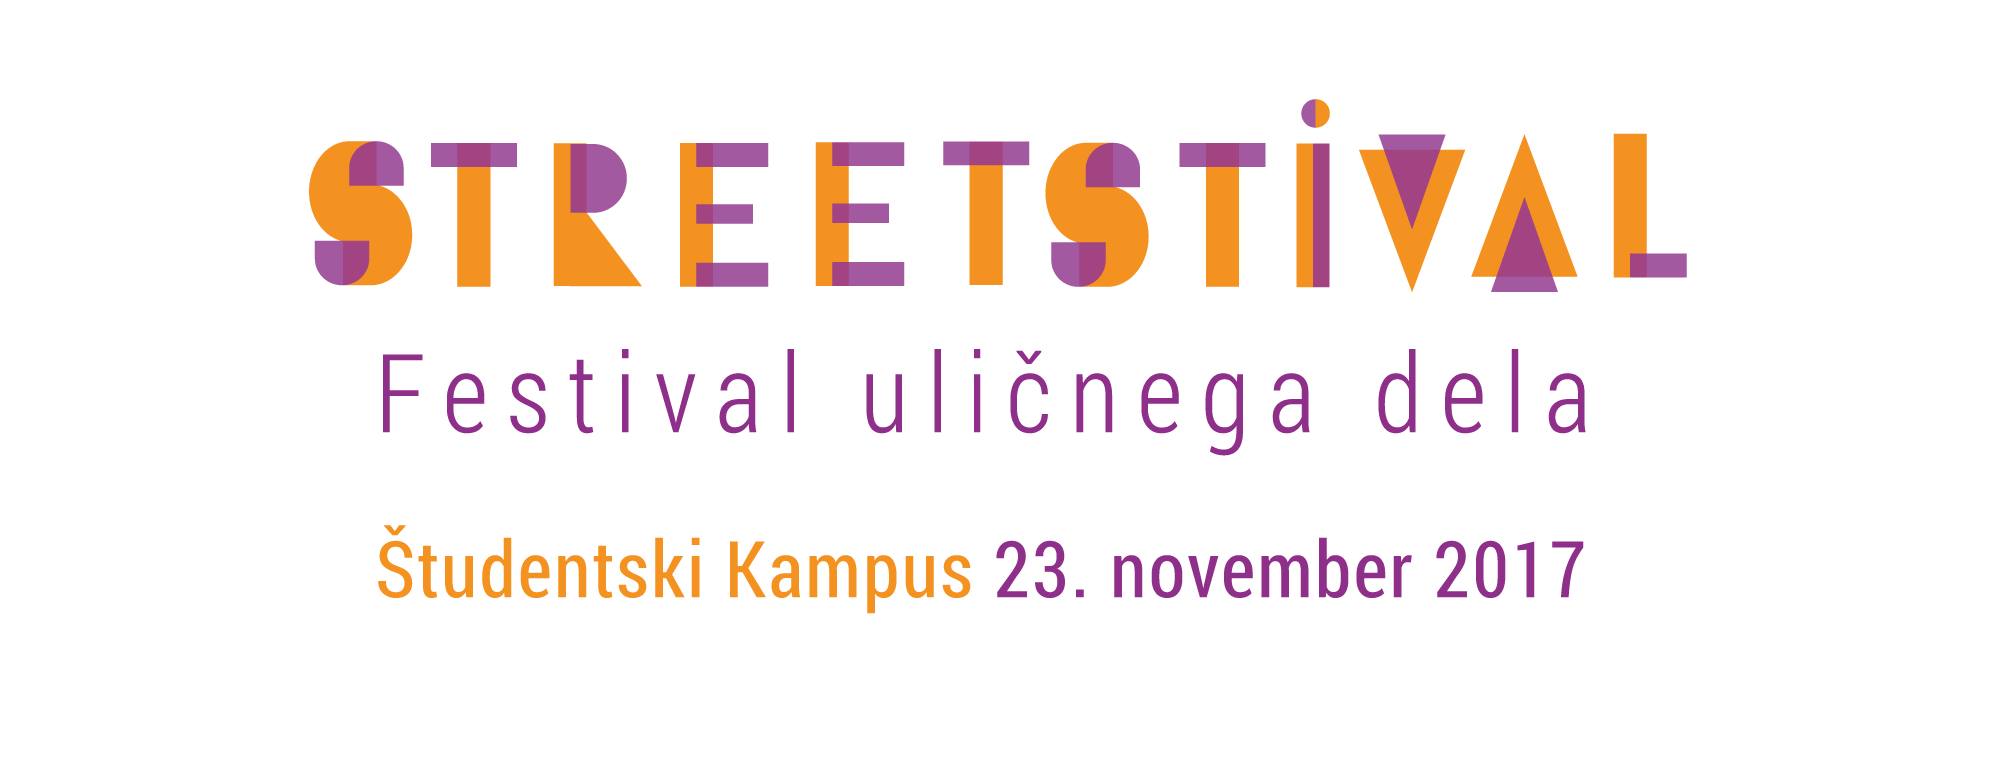 [:en]Street festival 23.11.2017. Student Campus